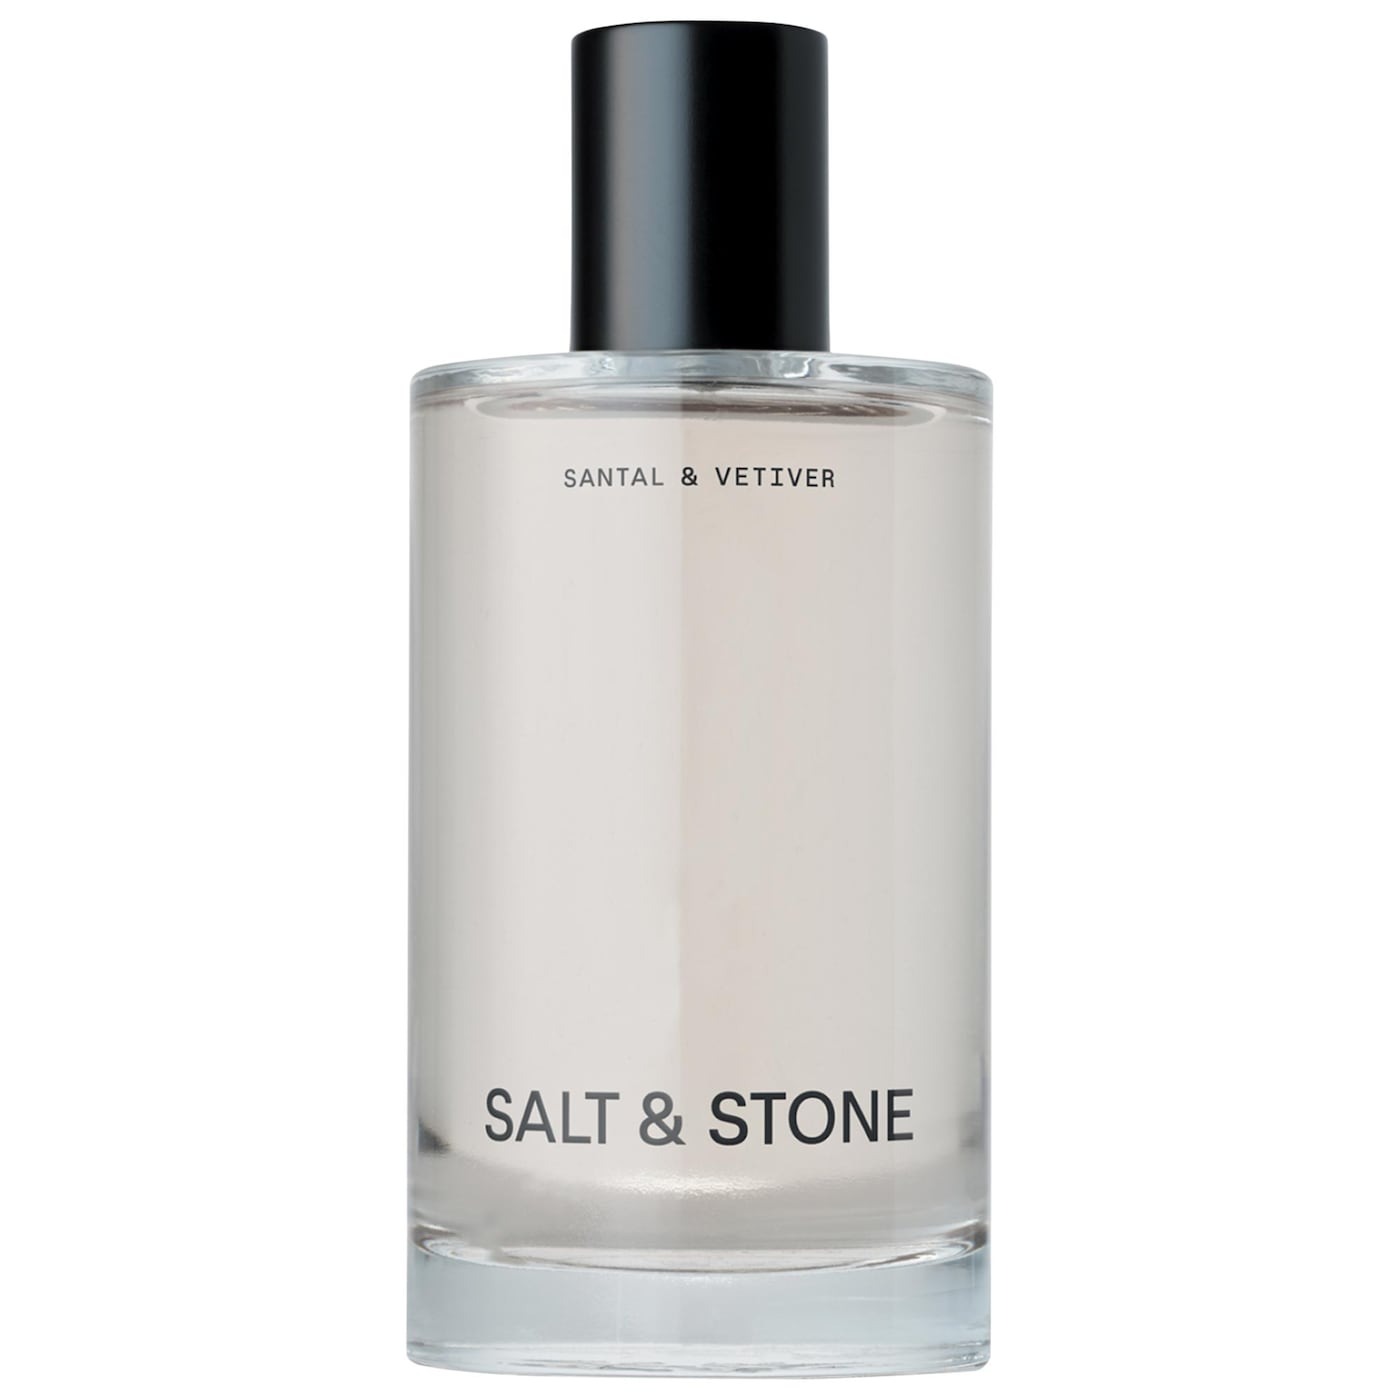 Salt & Stone Santal and Vetiver Body Fragrance Mist